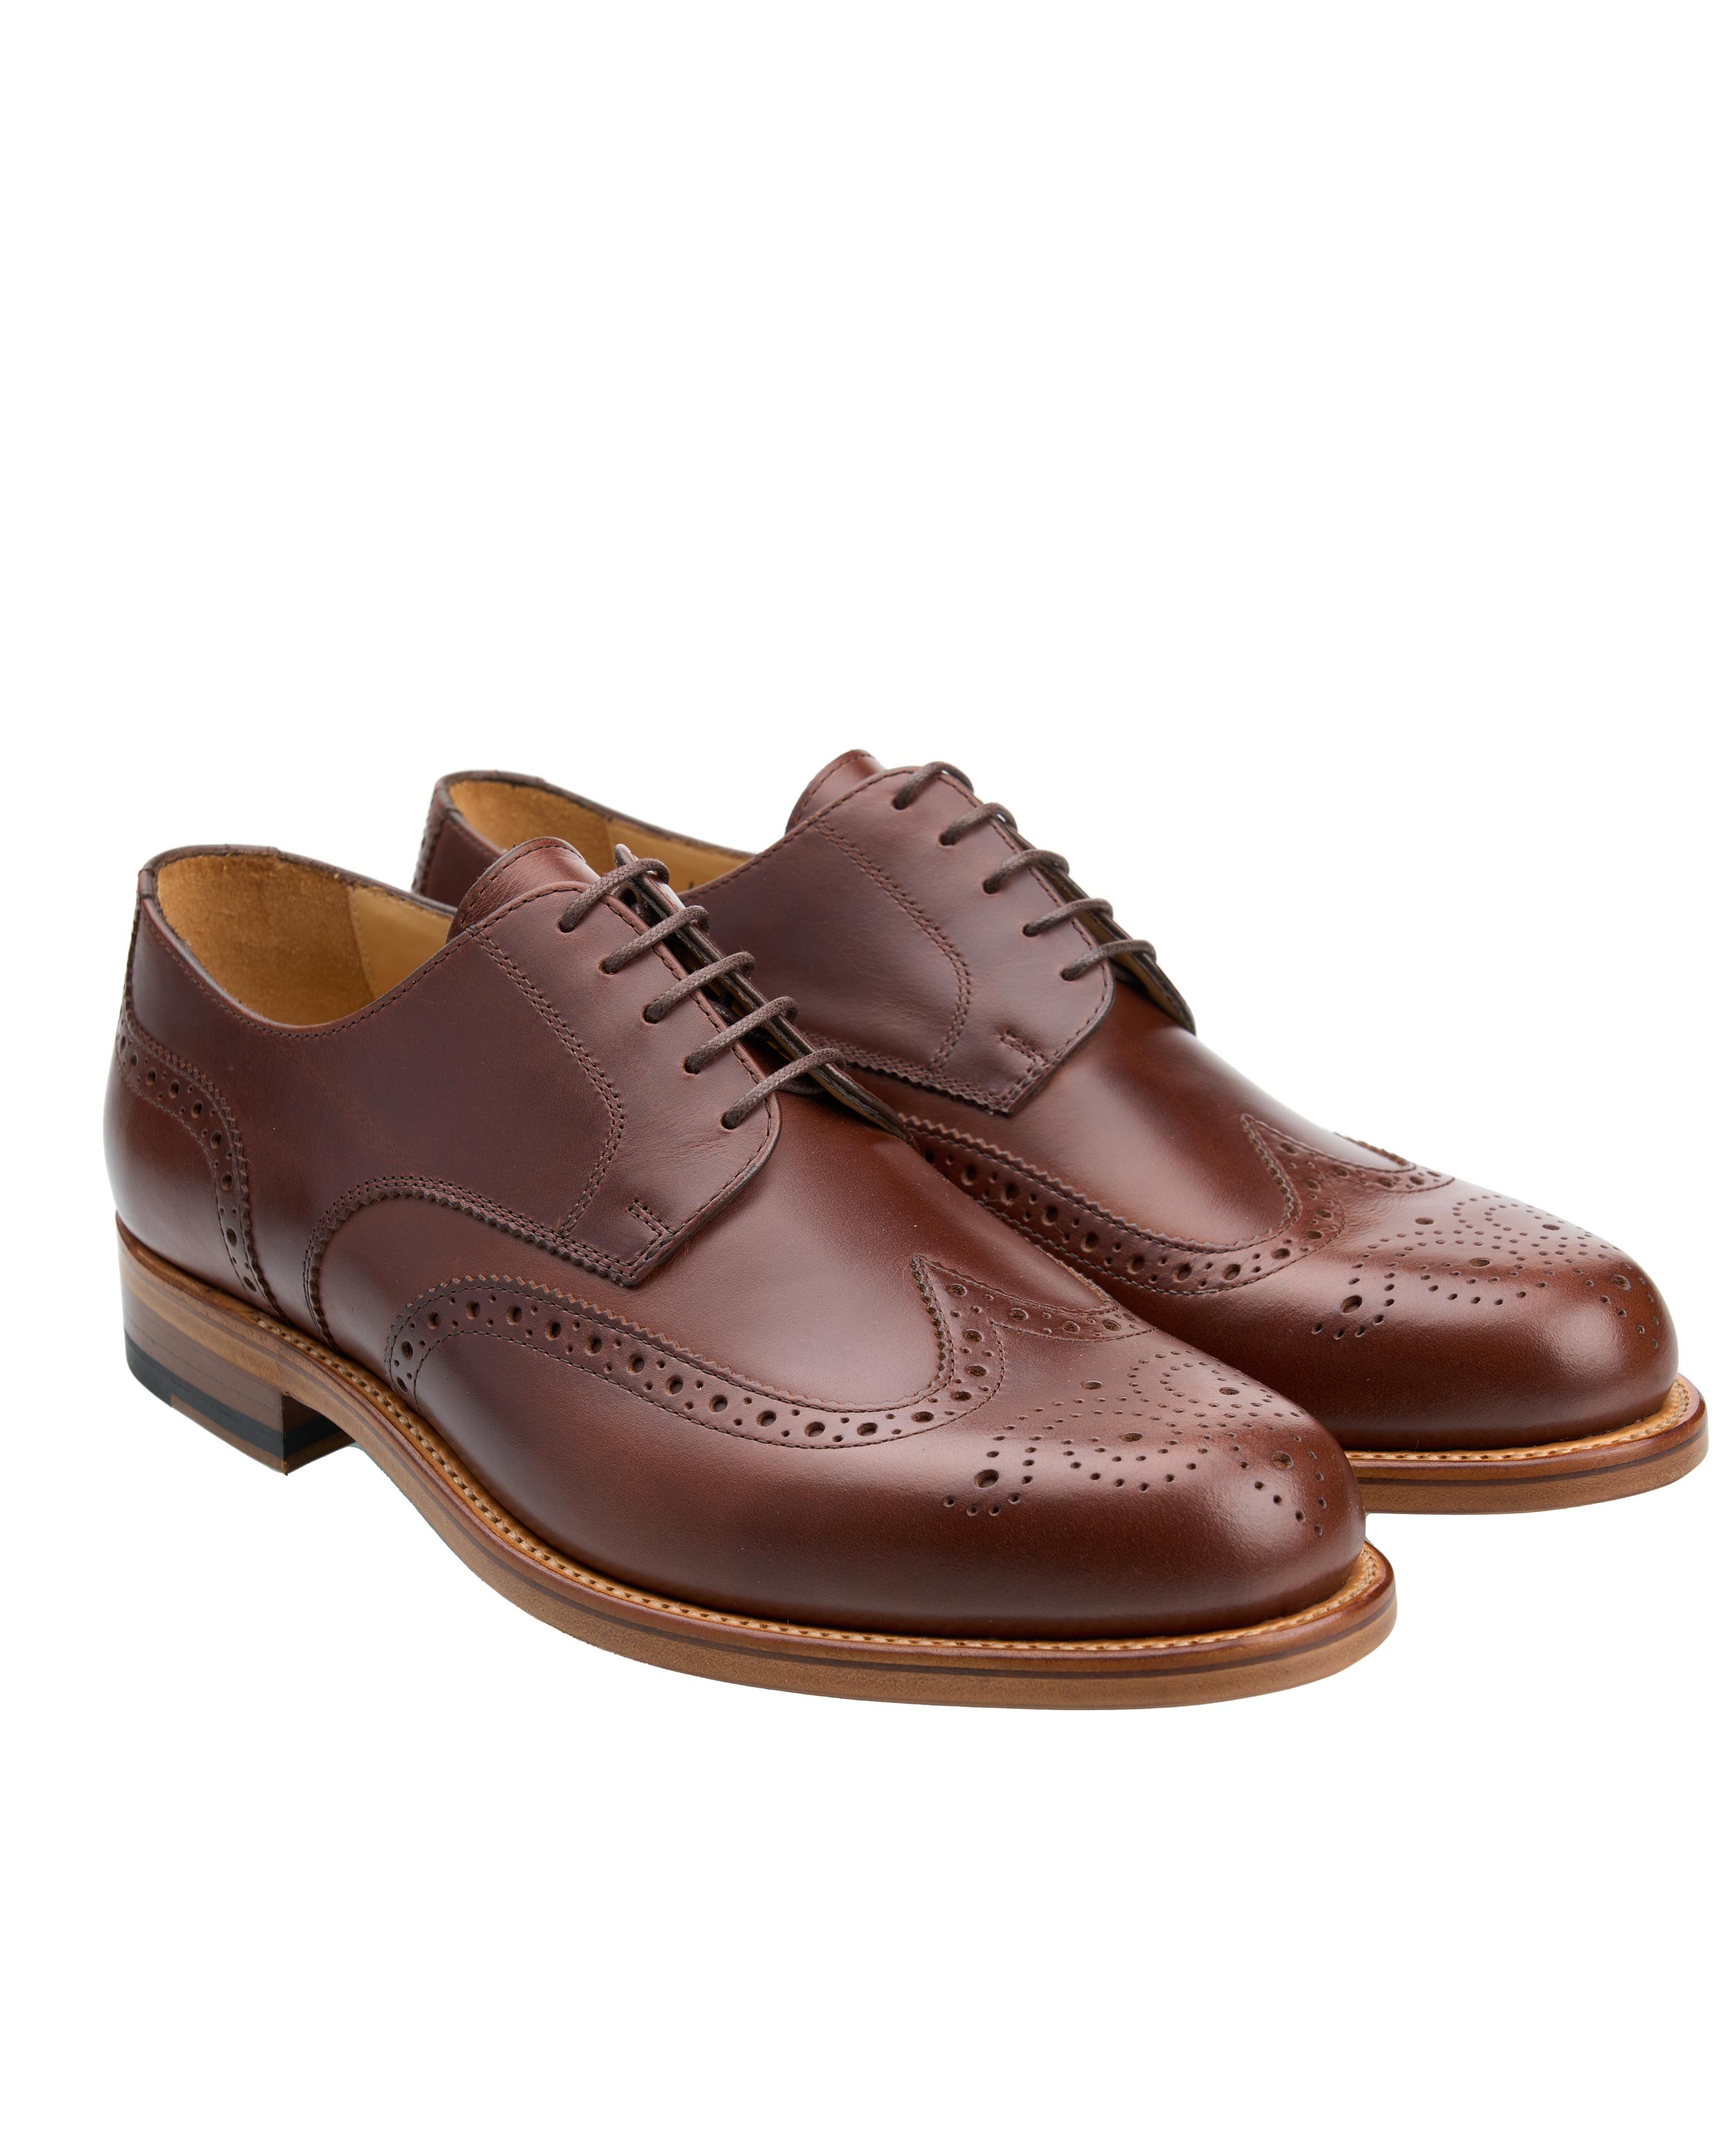 1938 Cricketeer Shoe brown